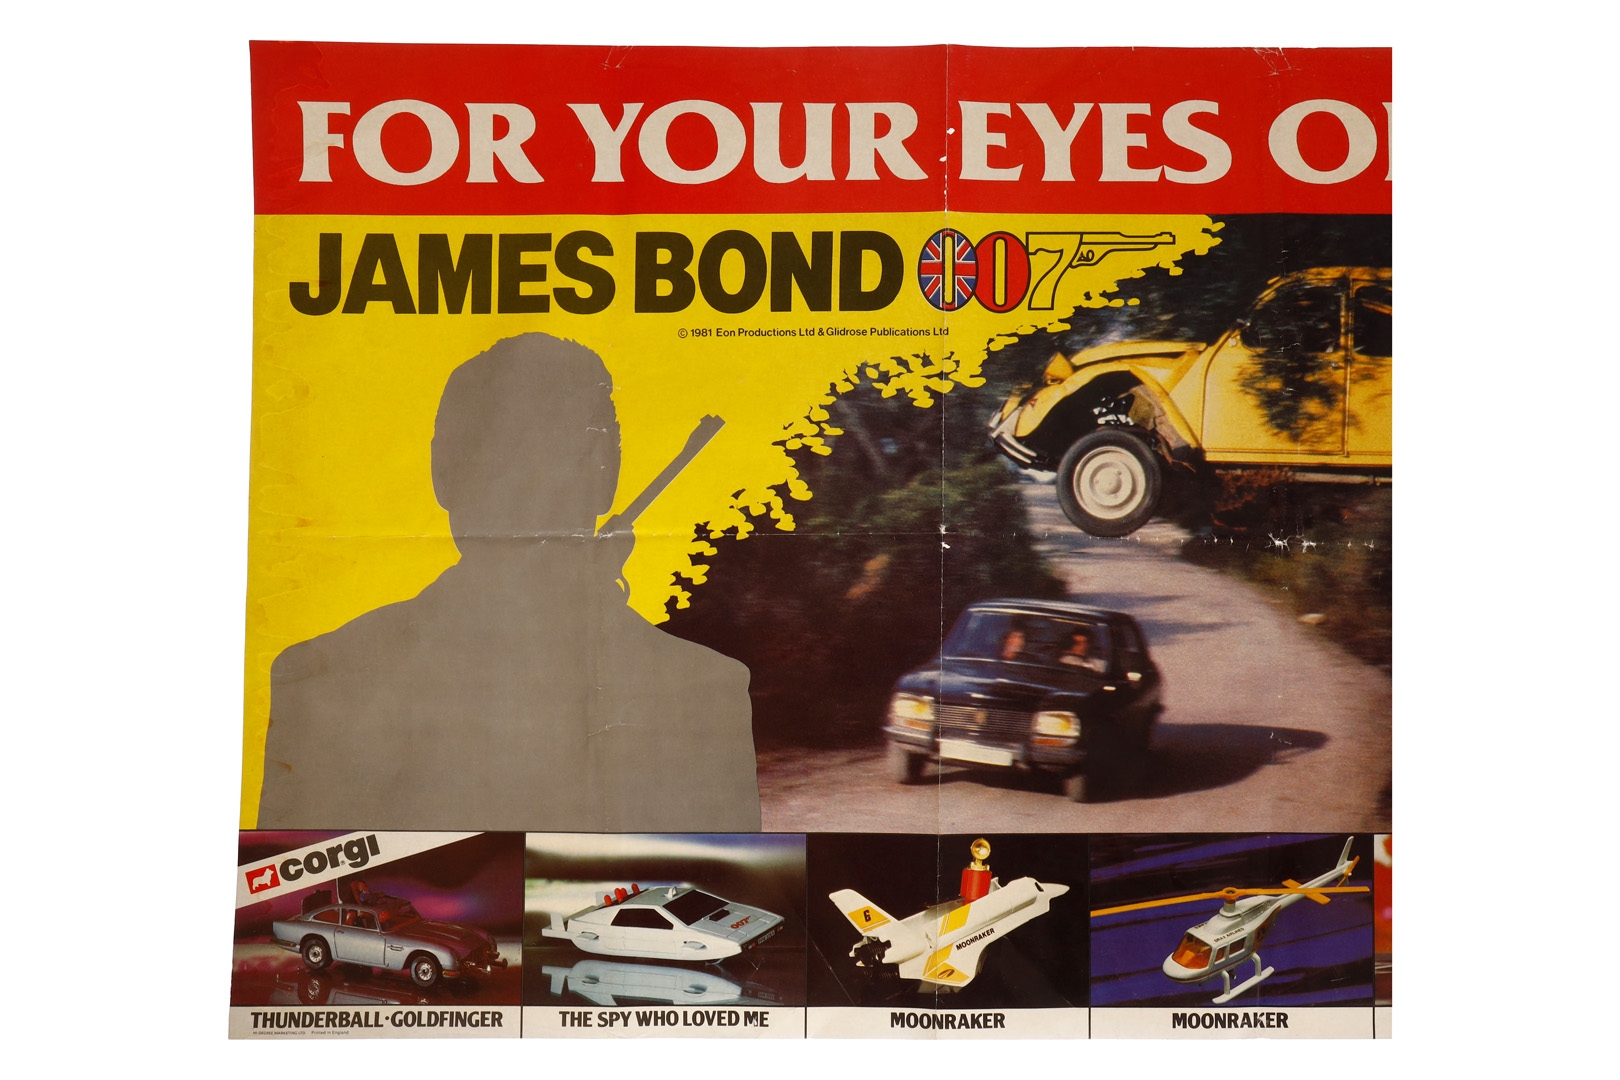 Corgi Plakat ”James Bond 007”, ”For your eyes only”, Gilt rose publications 1981, 70 x 48, leichte